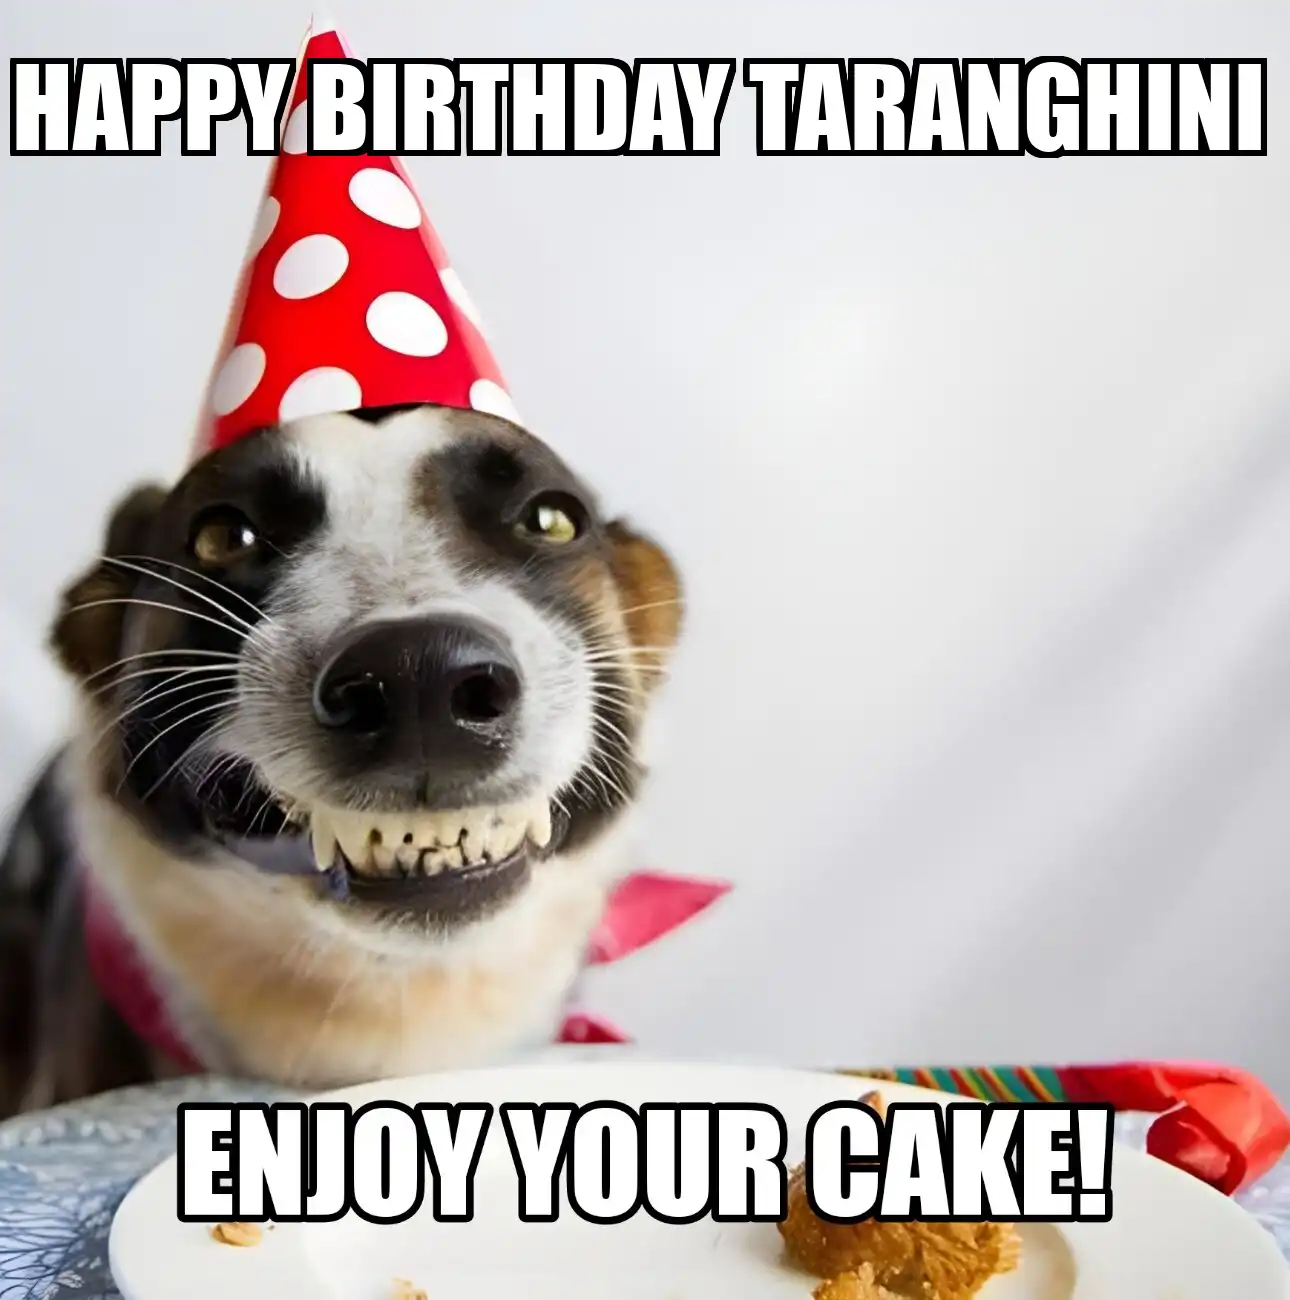 Happy Birthday Taranghini Enjoy Your Cake Dog Meme